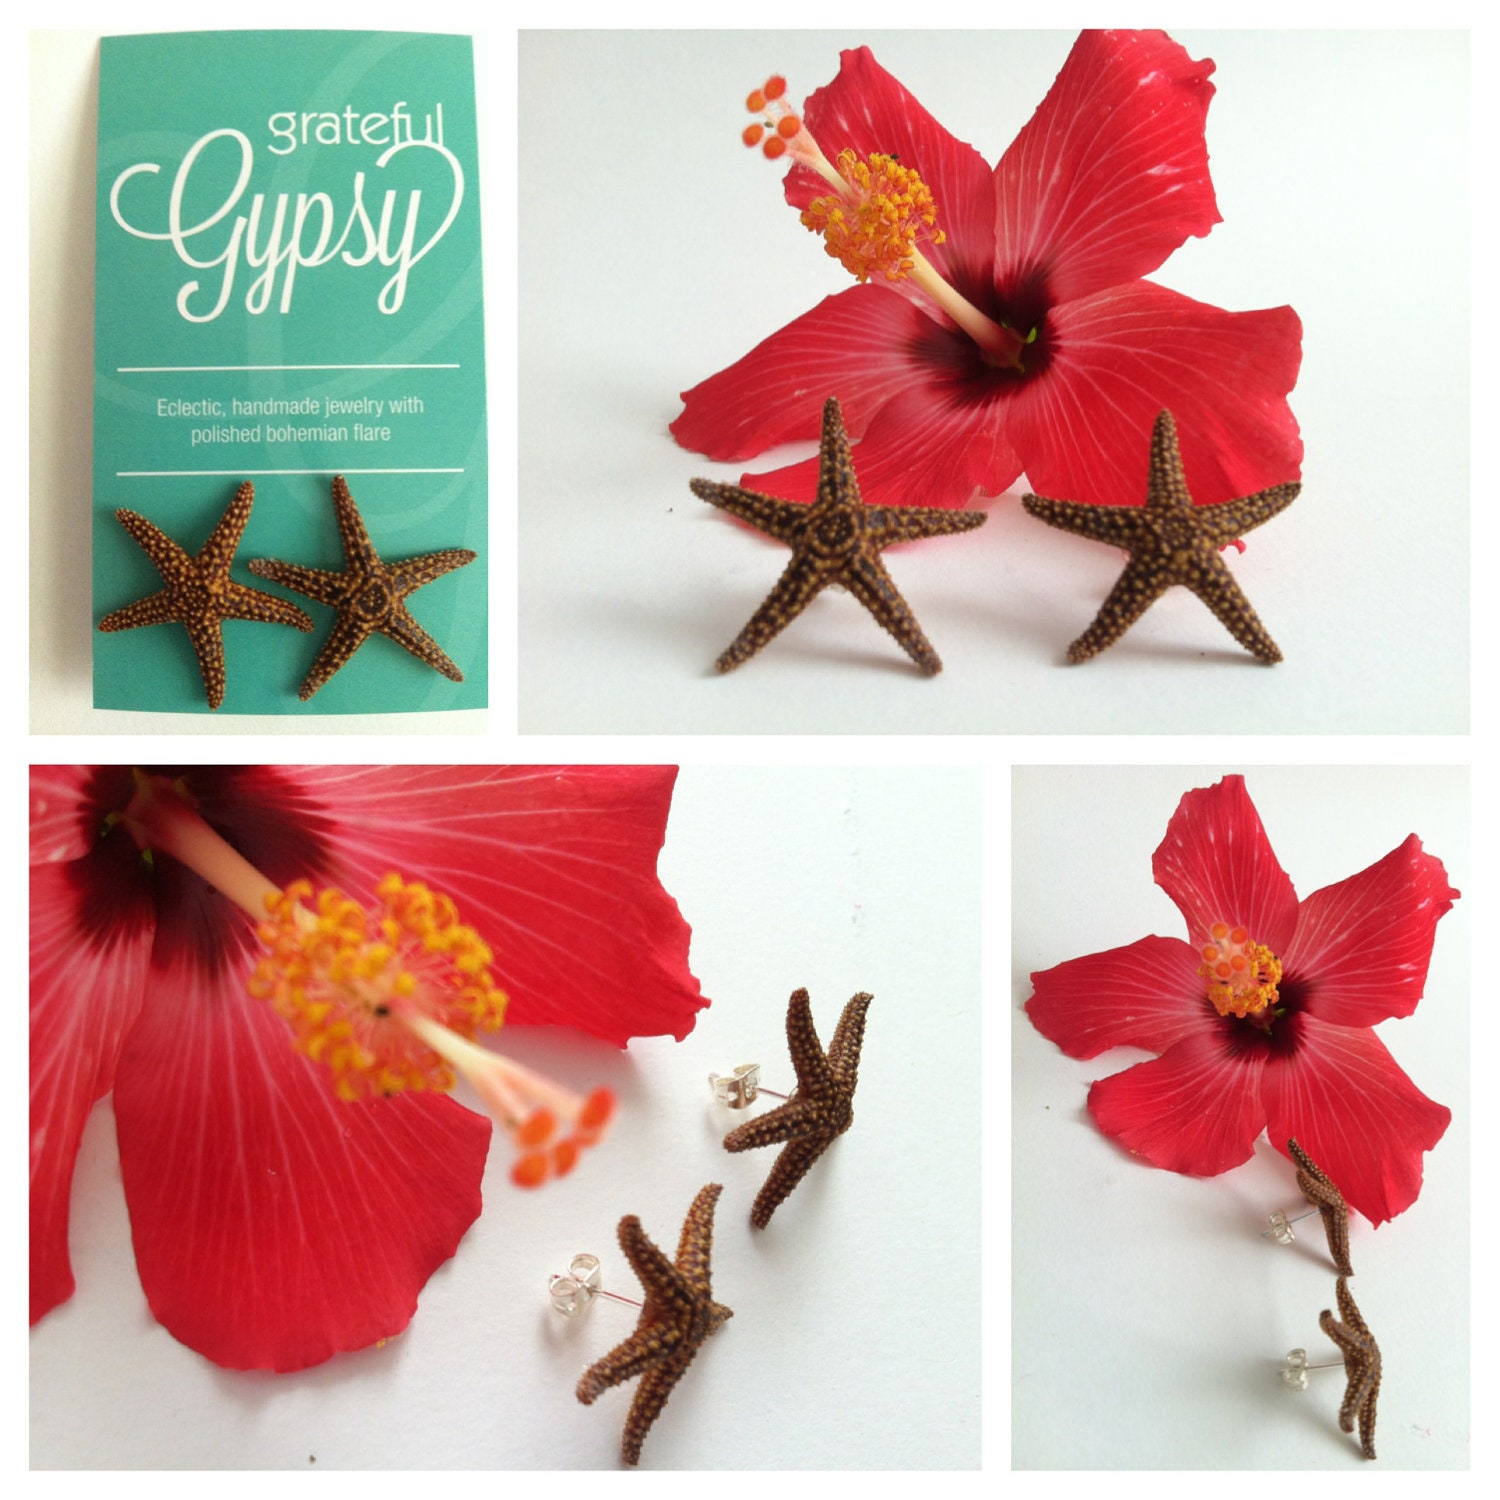 Starfish Earrings on Summer Stars Starfish Earrings By Gratefulgypsy On Etsy